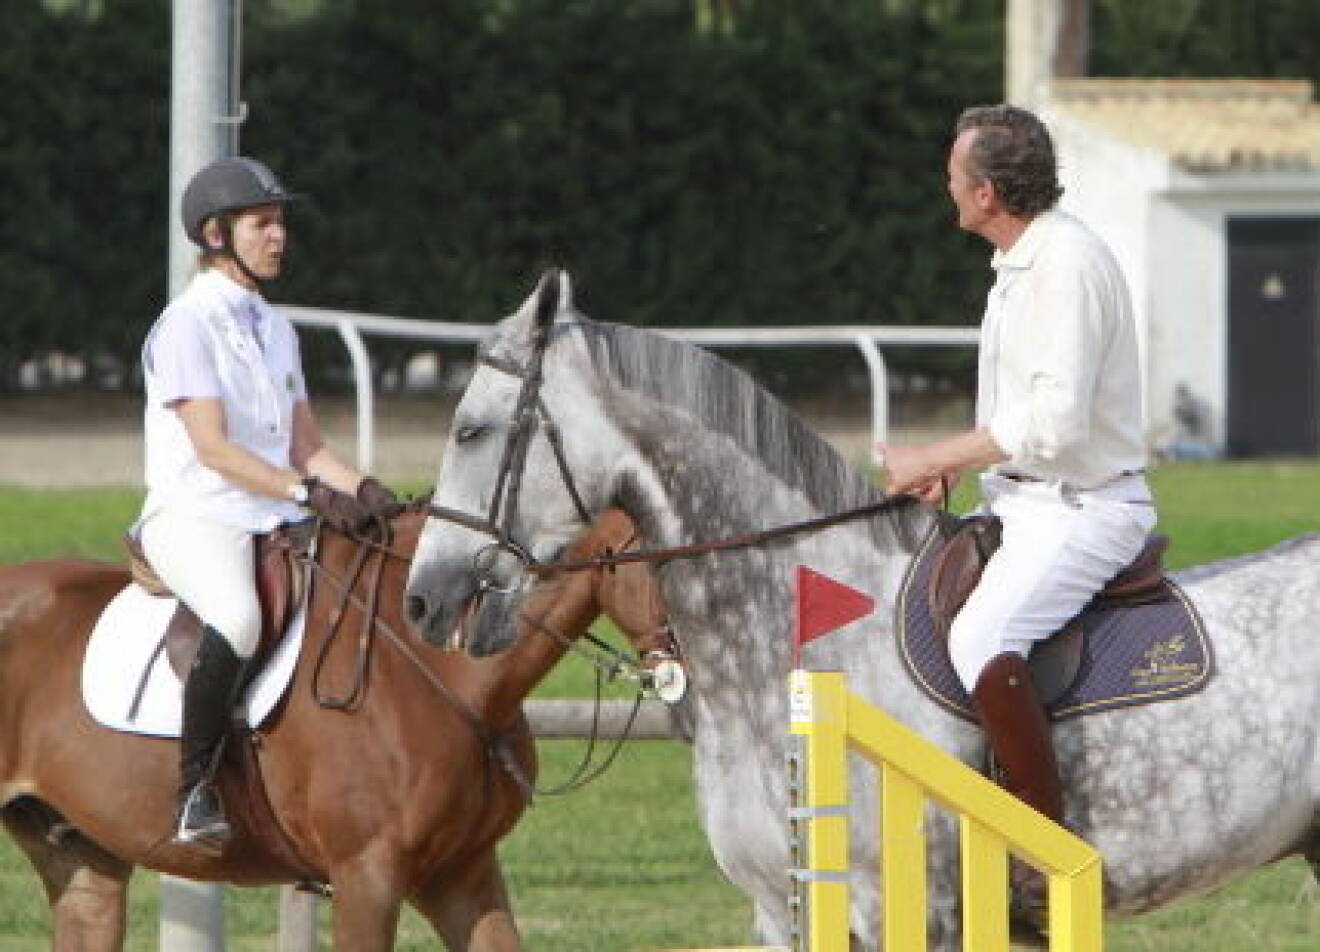 Princess Elena of Spain and Luis Astolfi took part in the II Ruta Via de la Plata horse riding competition in Seville